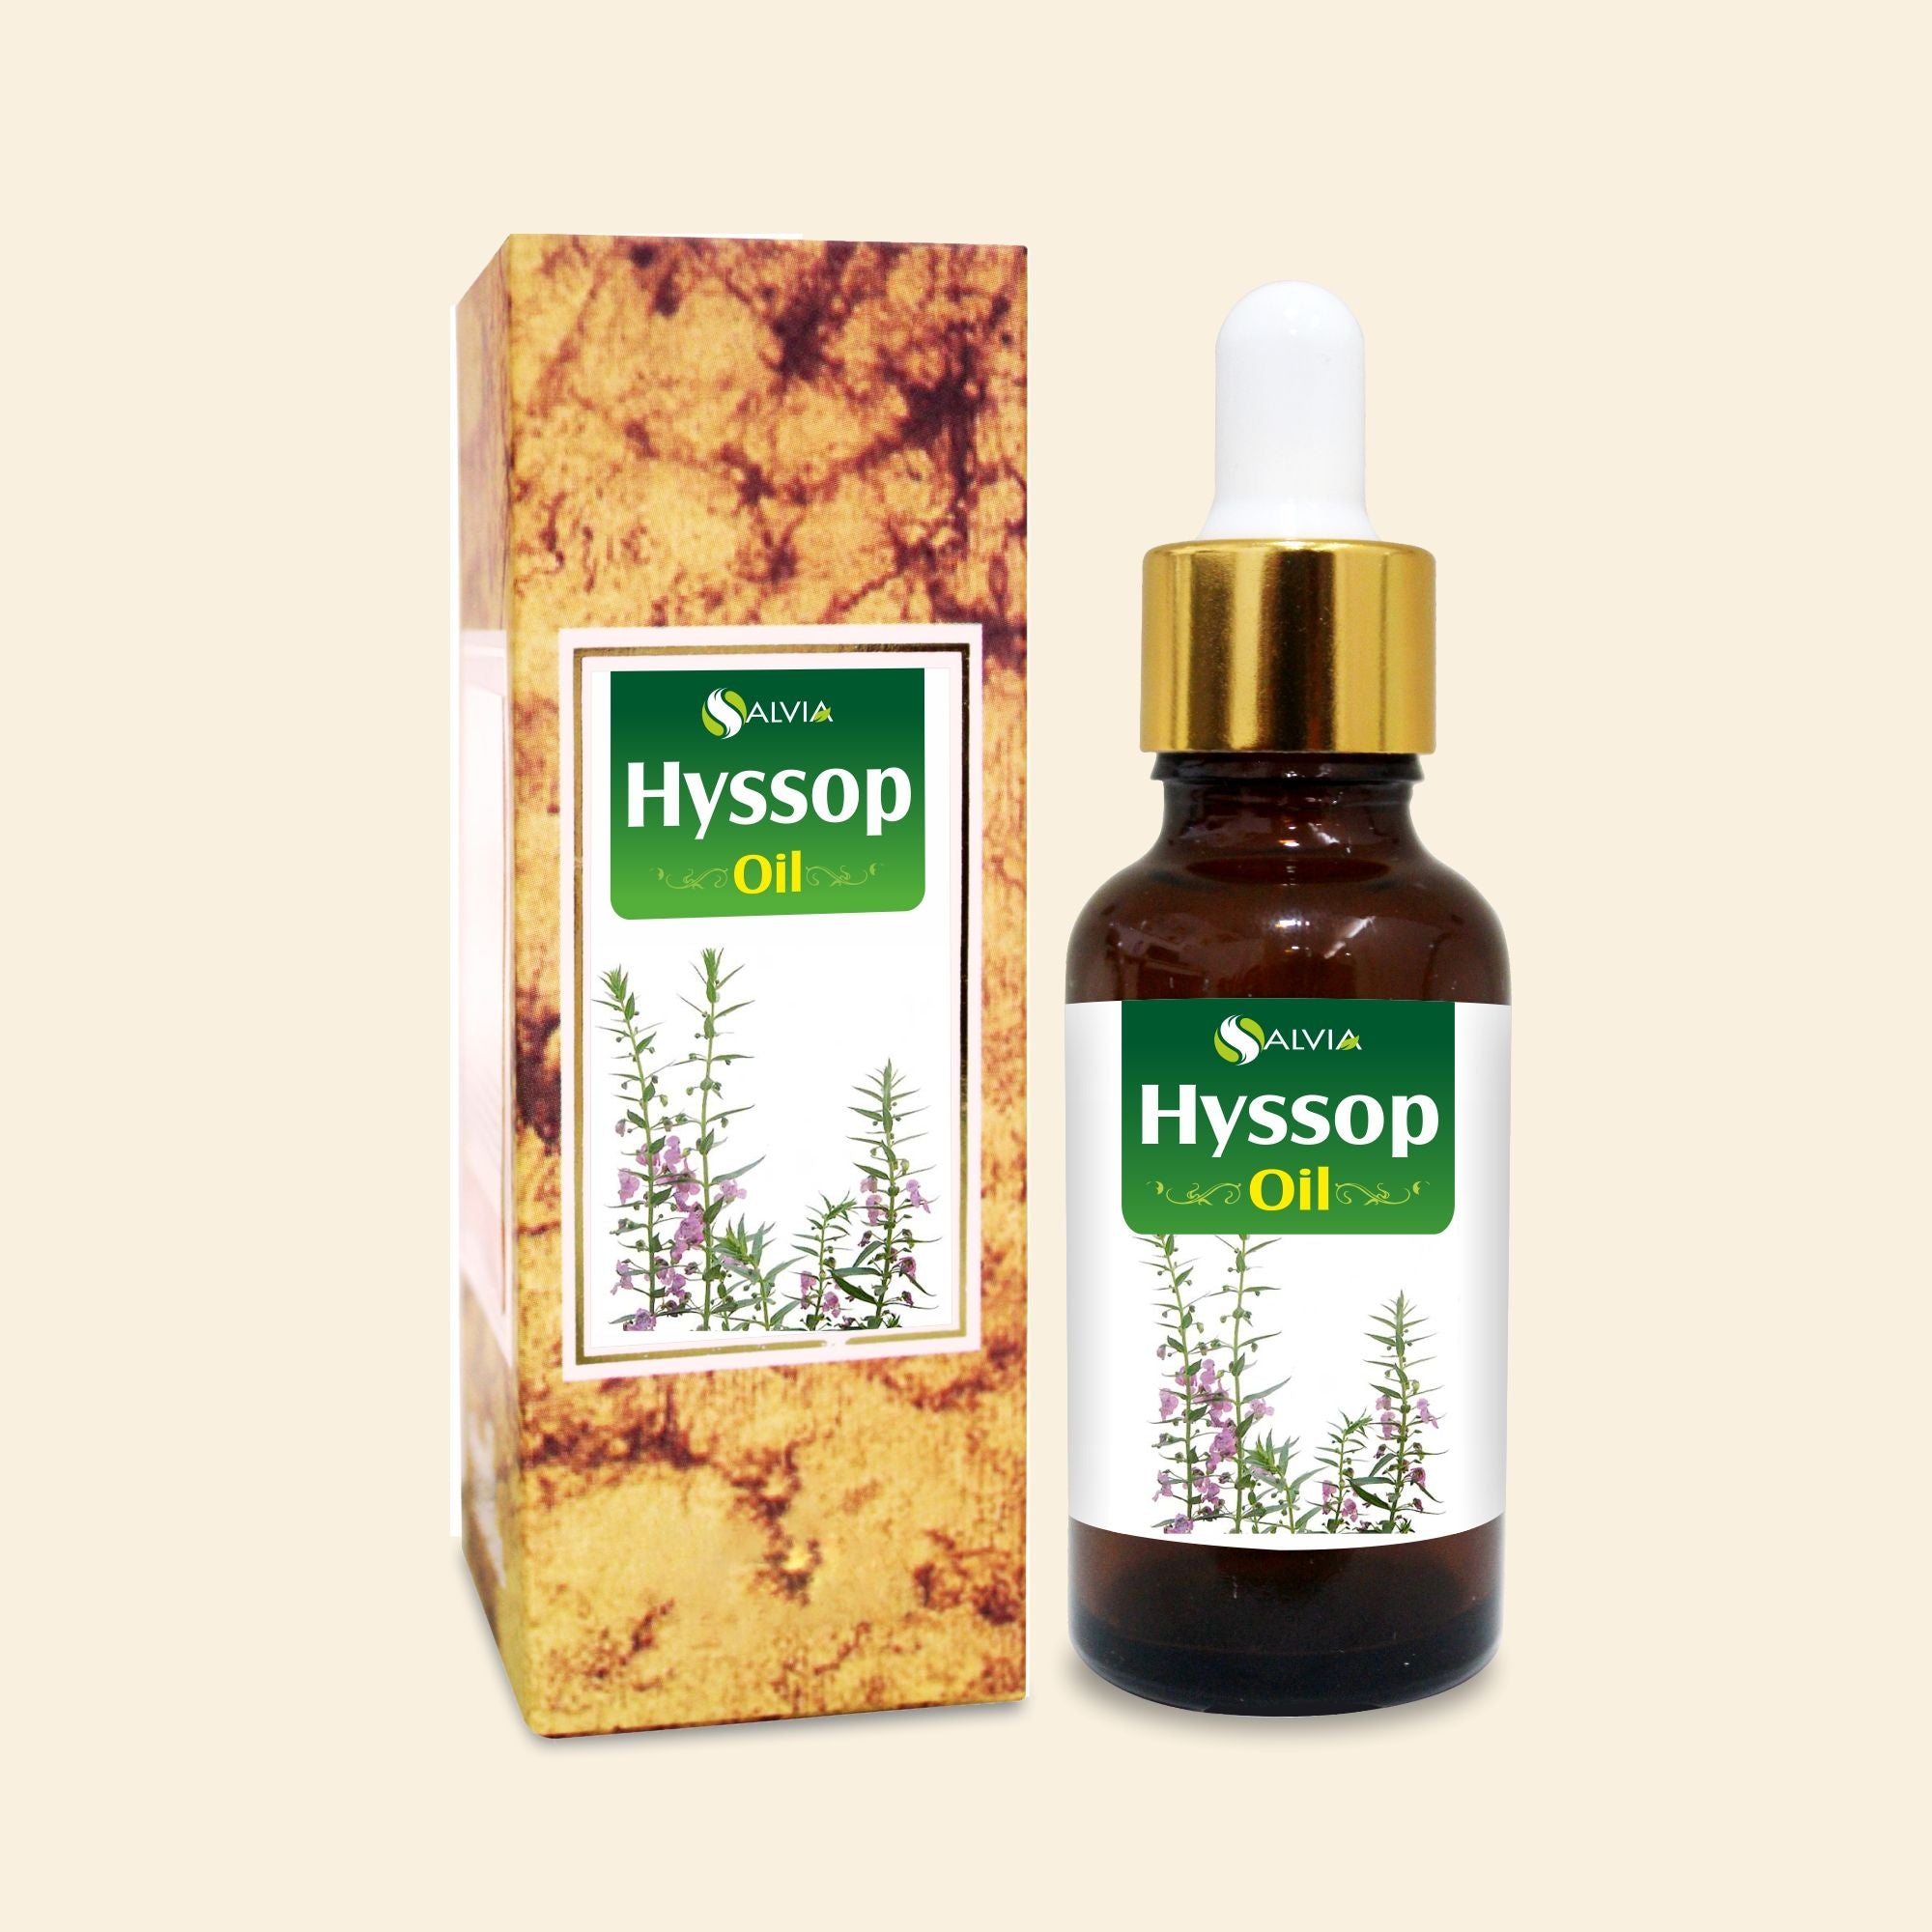 Salvia Natural Essential Oils Hyssop Oil (Hyssopus Officinalis) Pure Natural Essential Oil